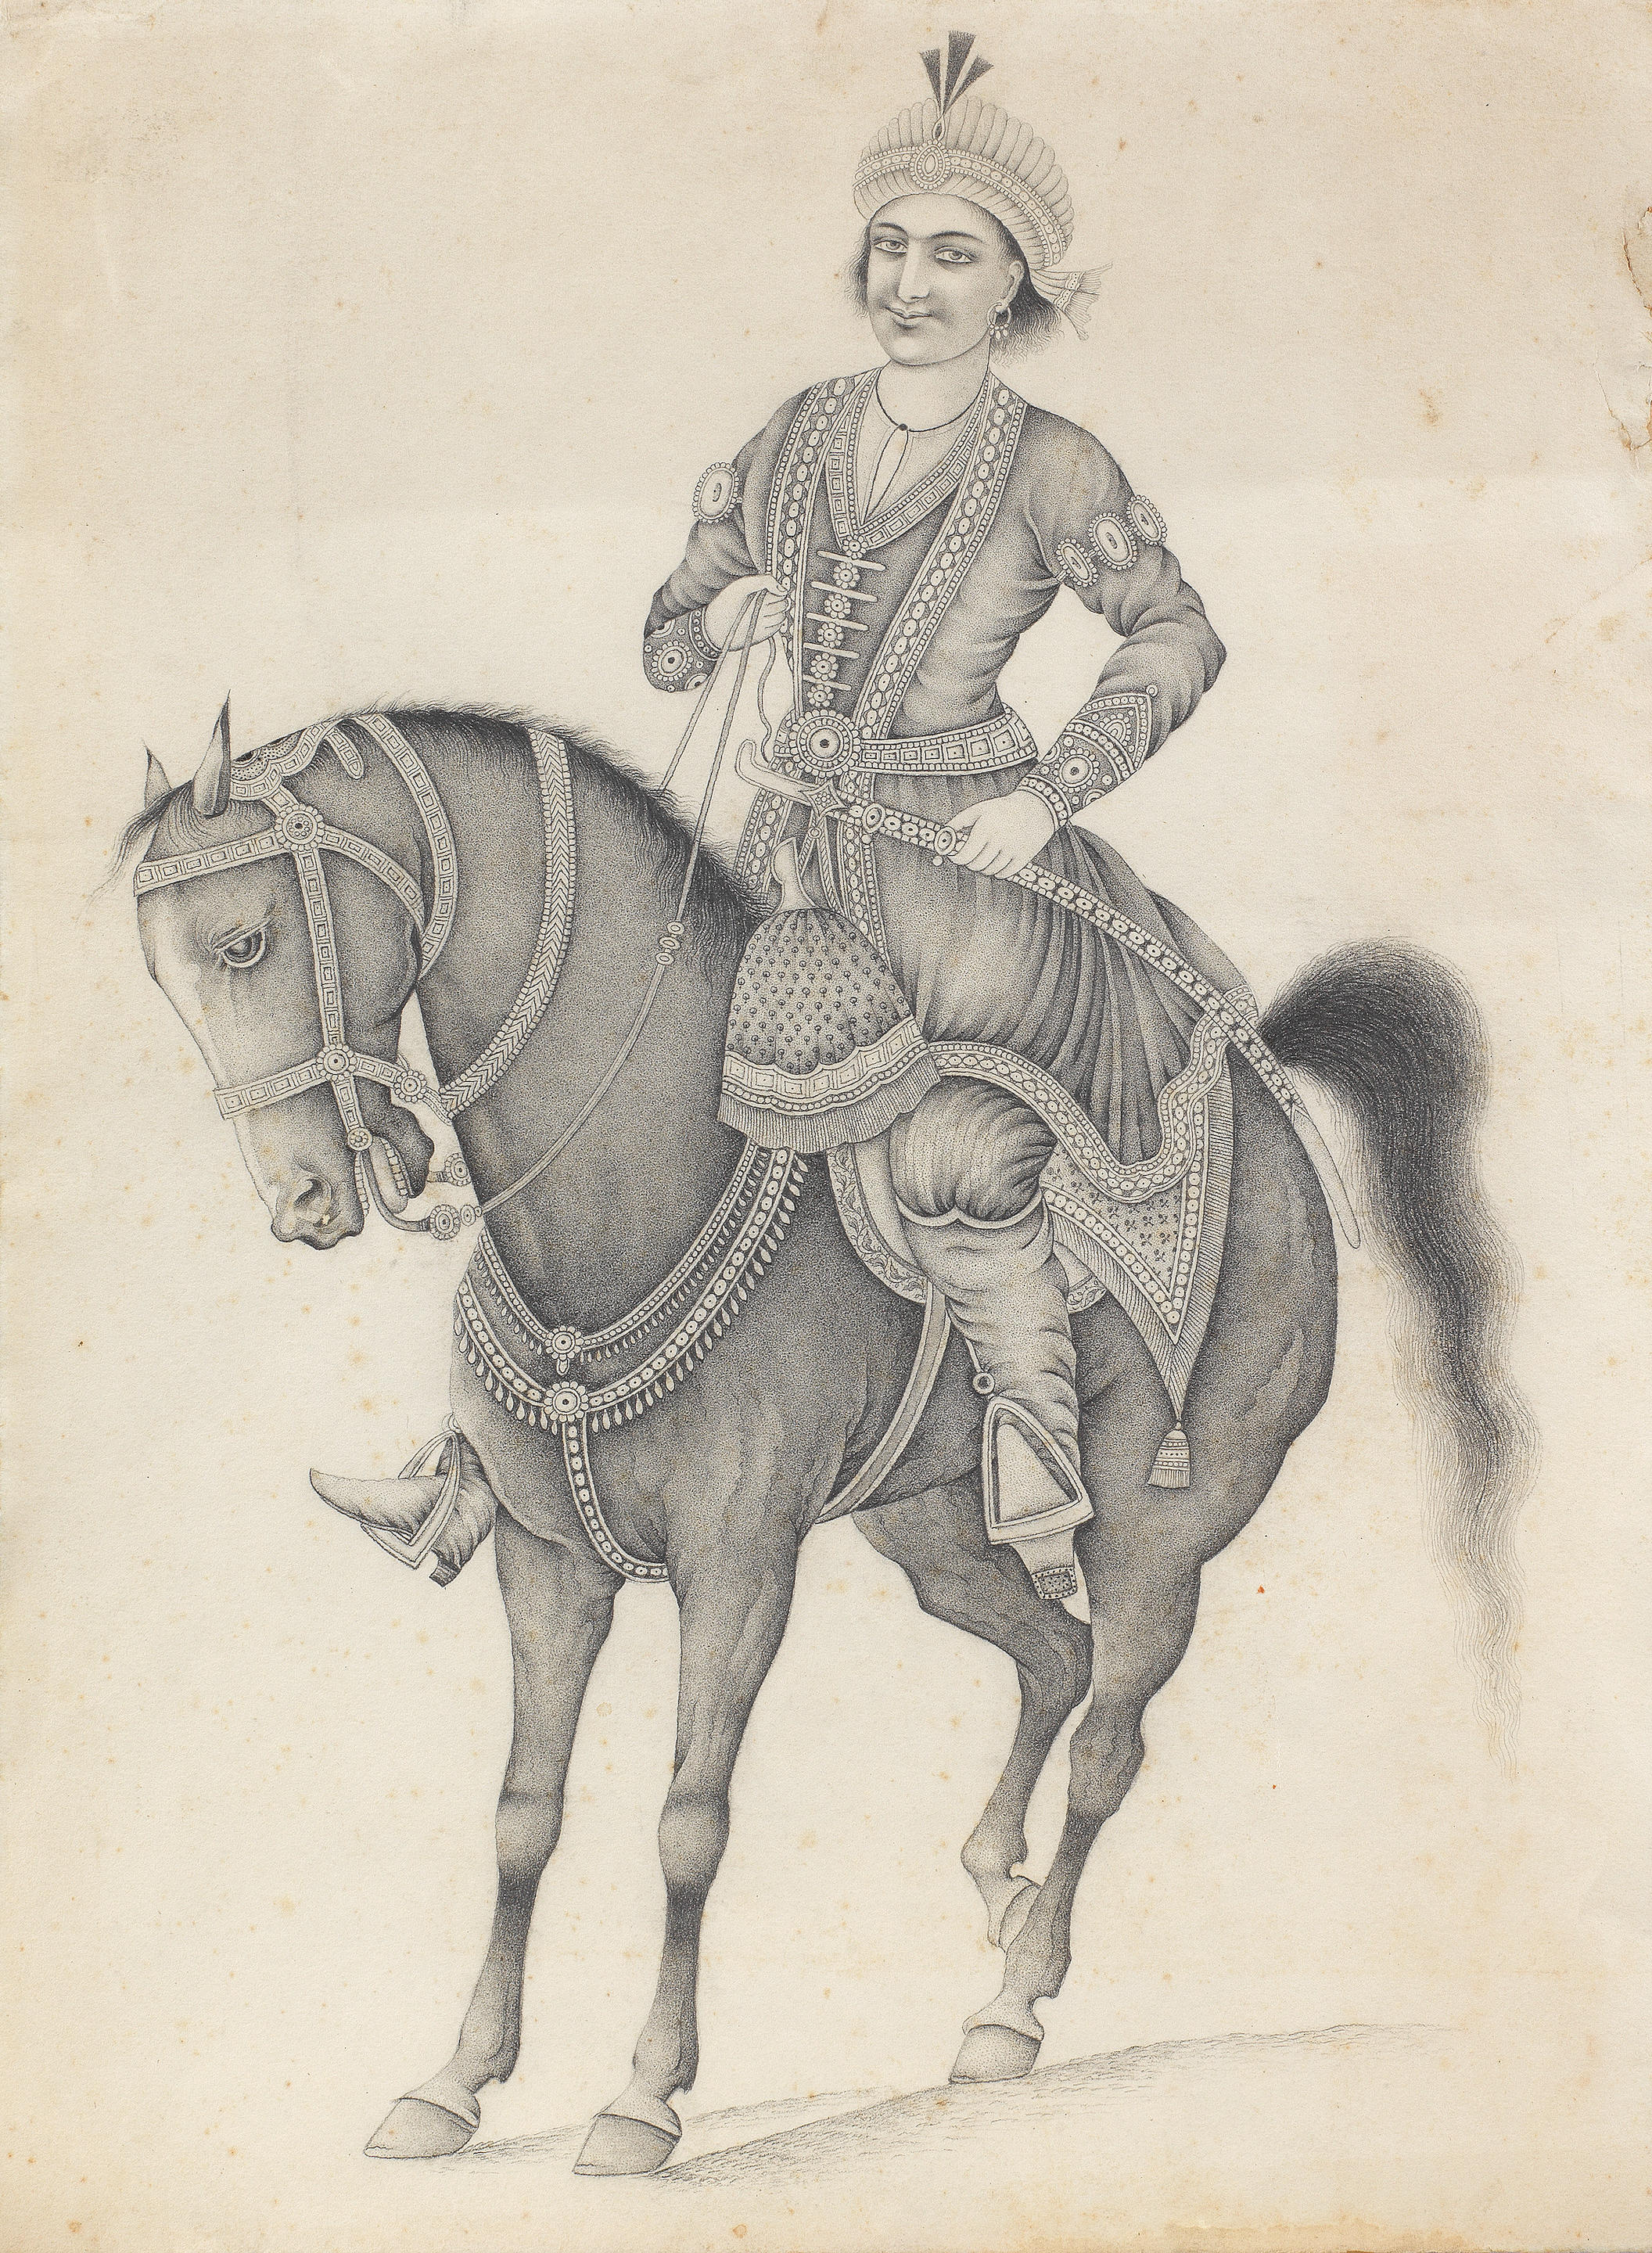 A prince on horseback